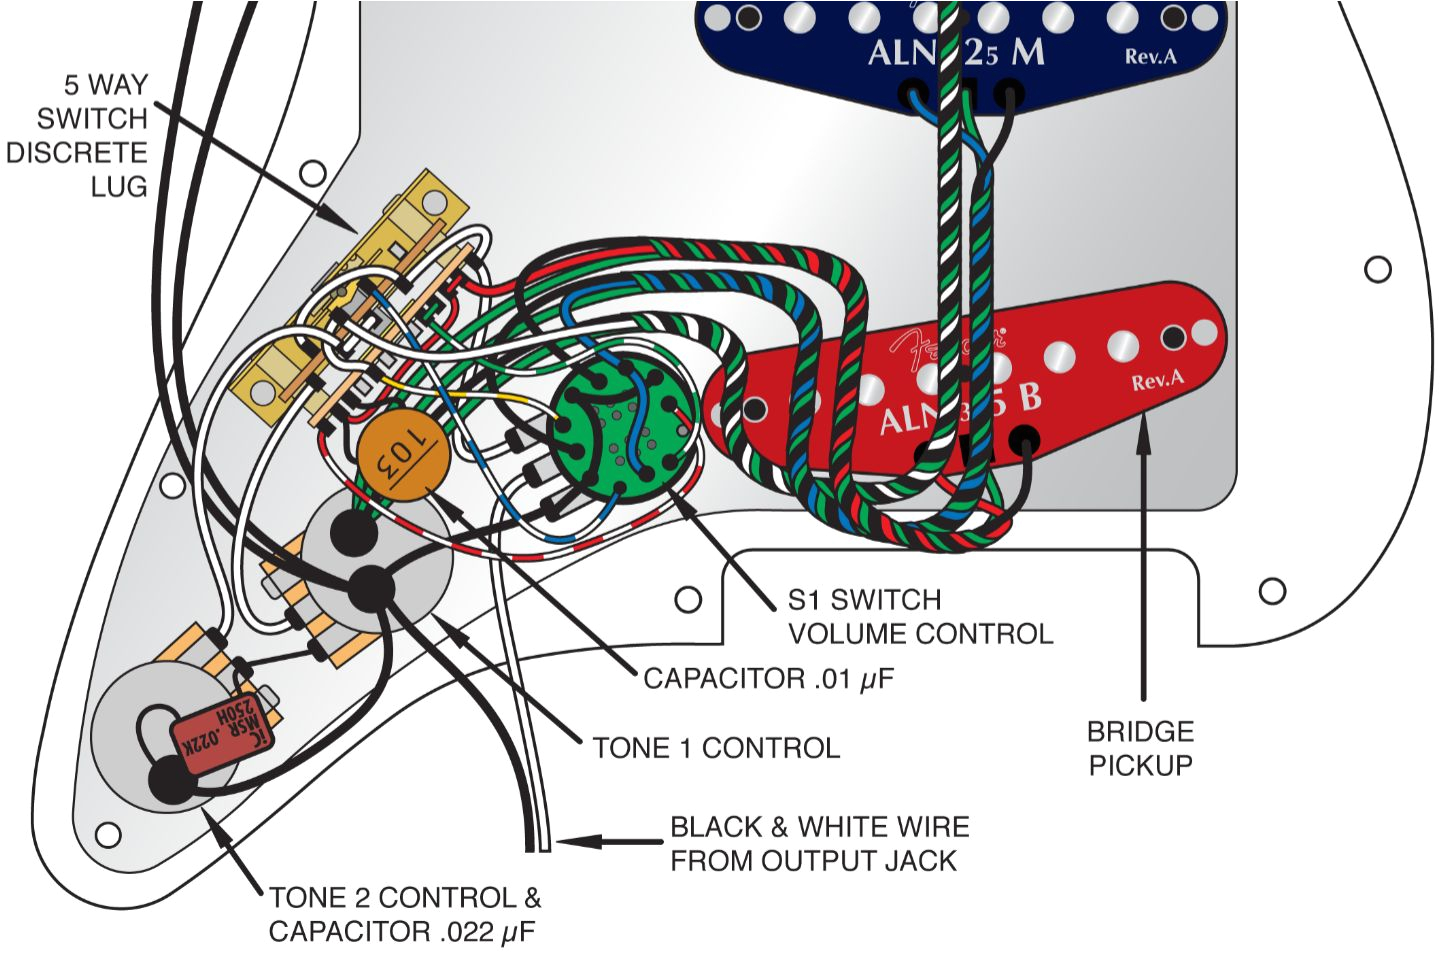 fender deluxe players stratocaster wiring diagram lvi vegenero store u2022stratocaster deluxe wiring diagram 14 16